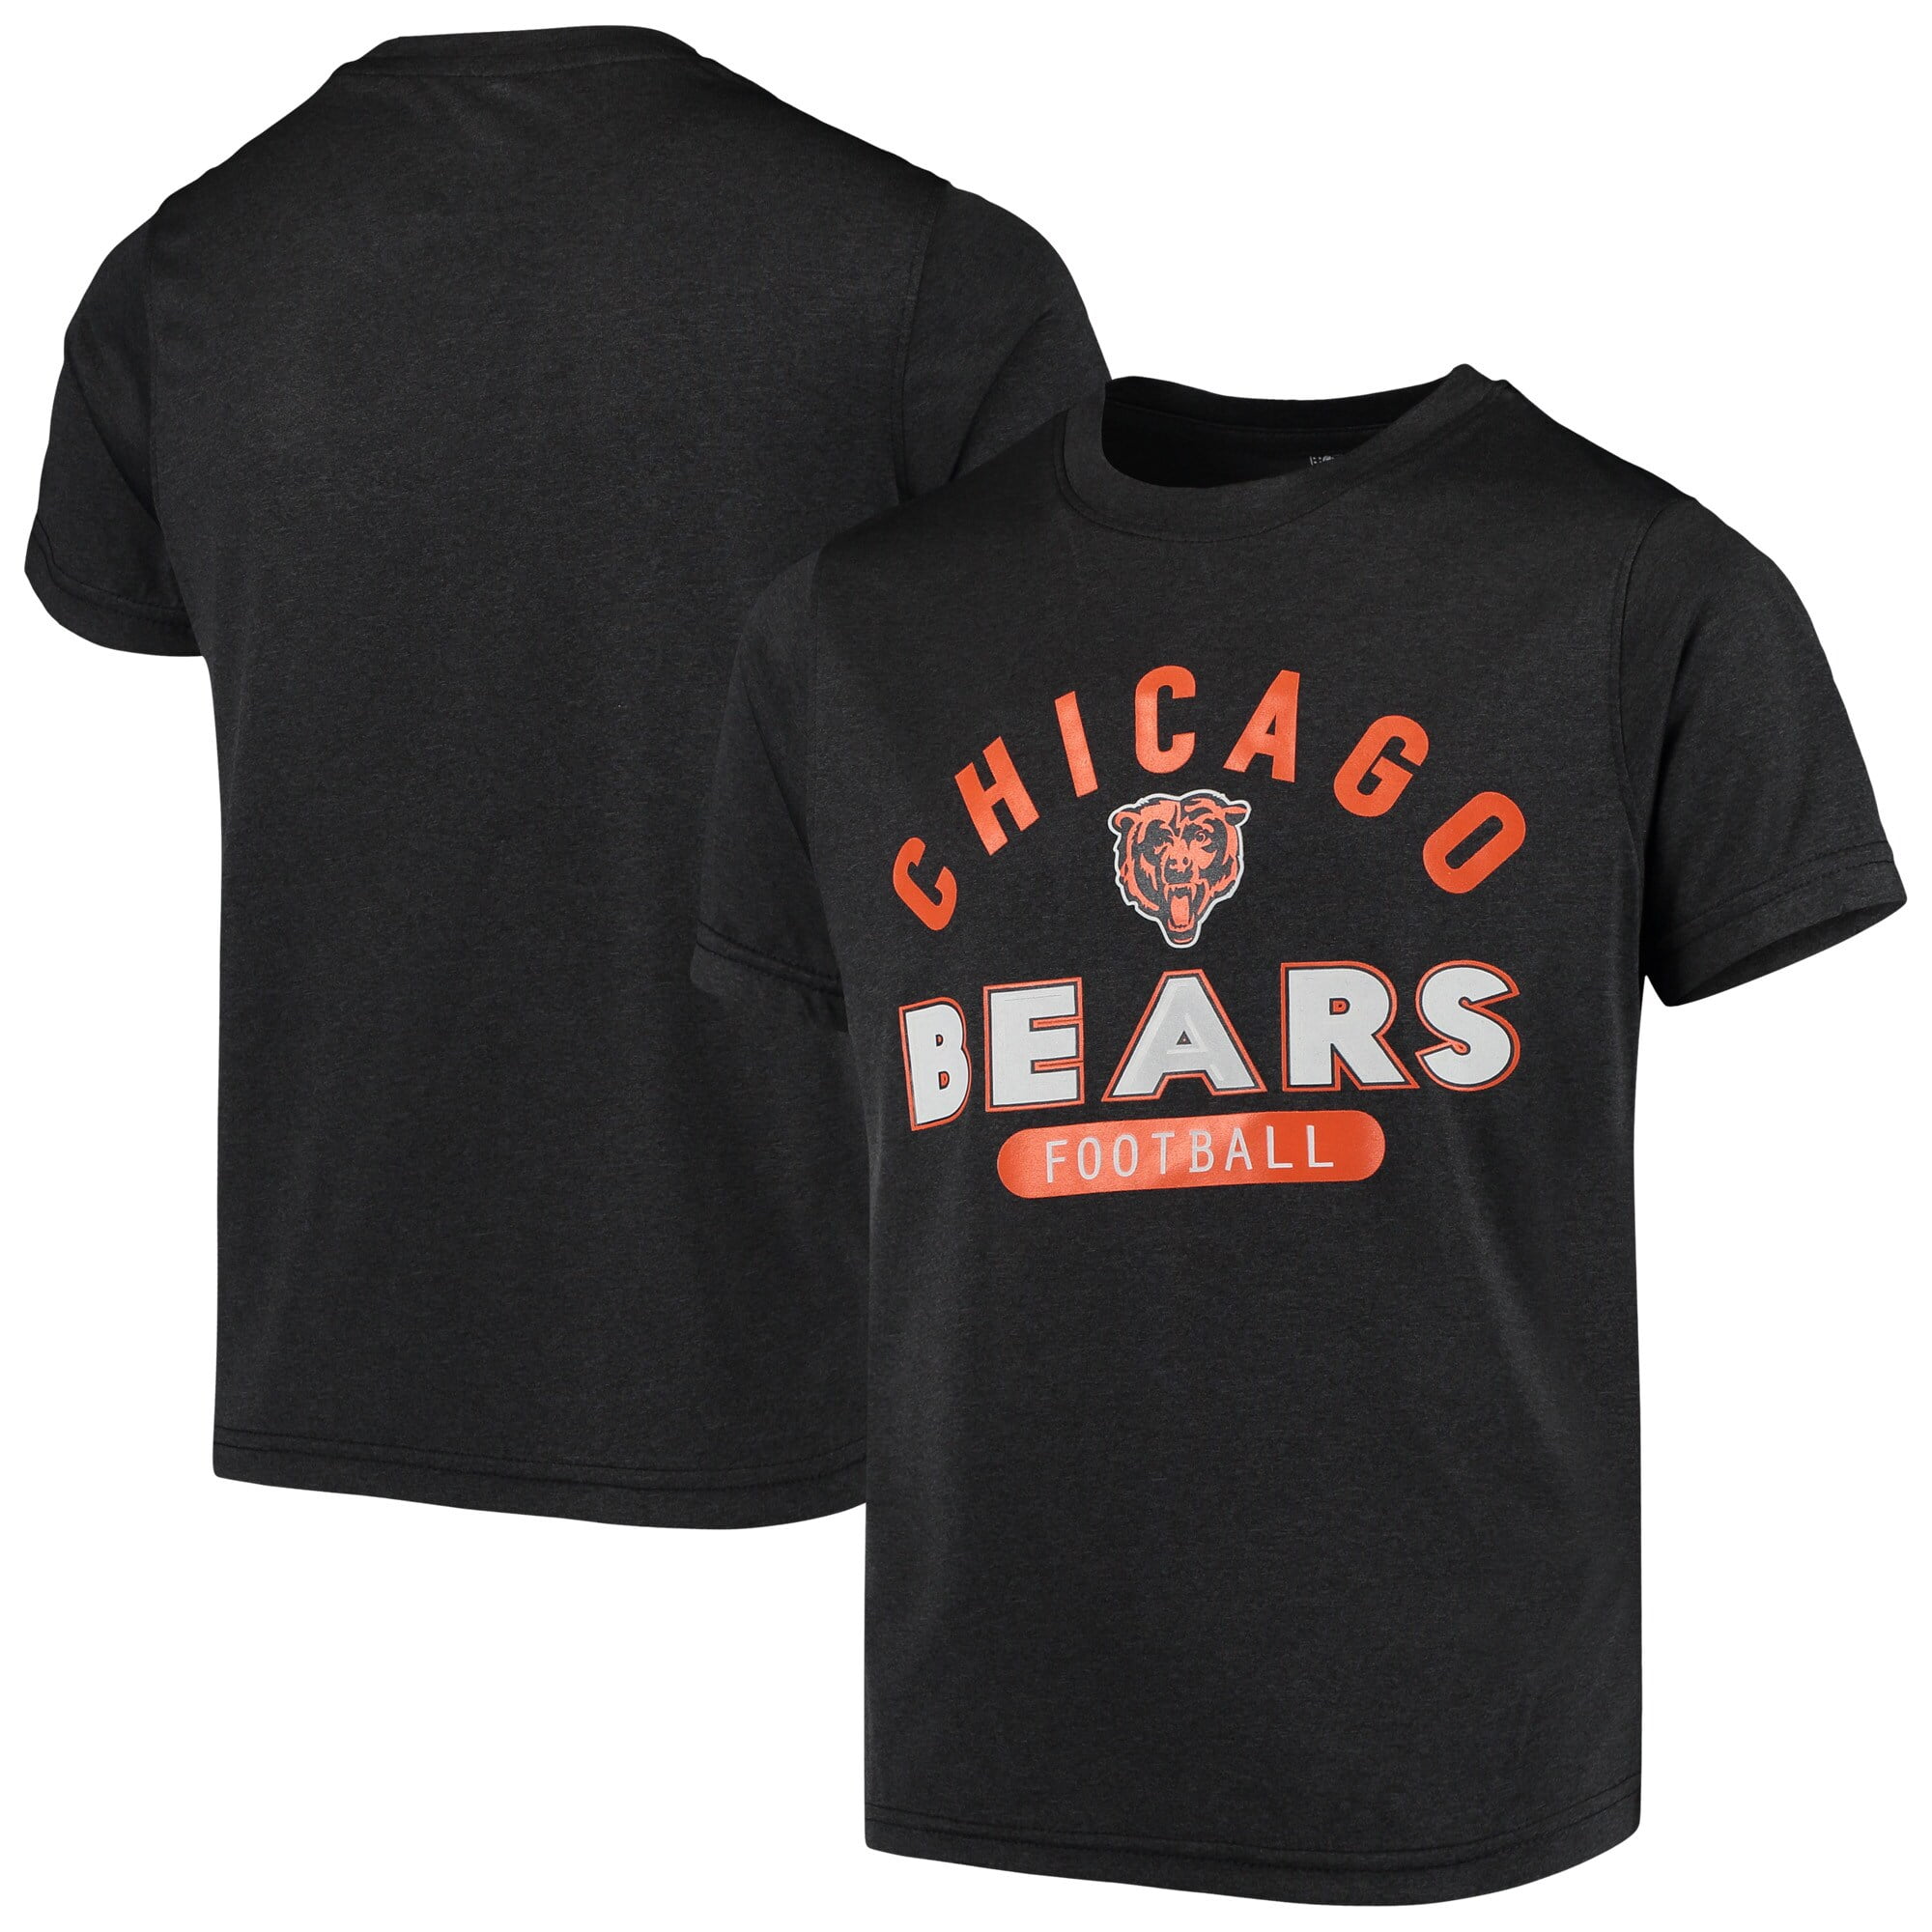 Youth Black Chicago Bears Twist T-Shirt - Walmart.com - Walmart.com